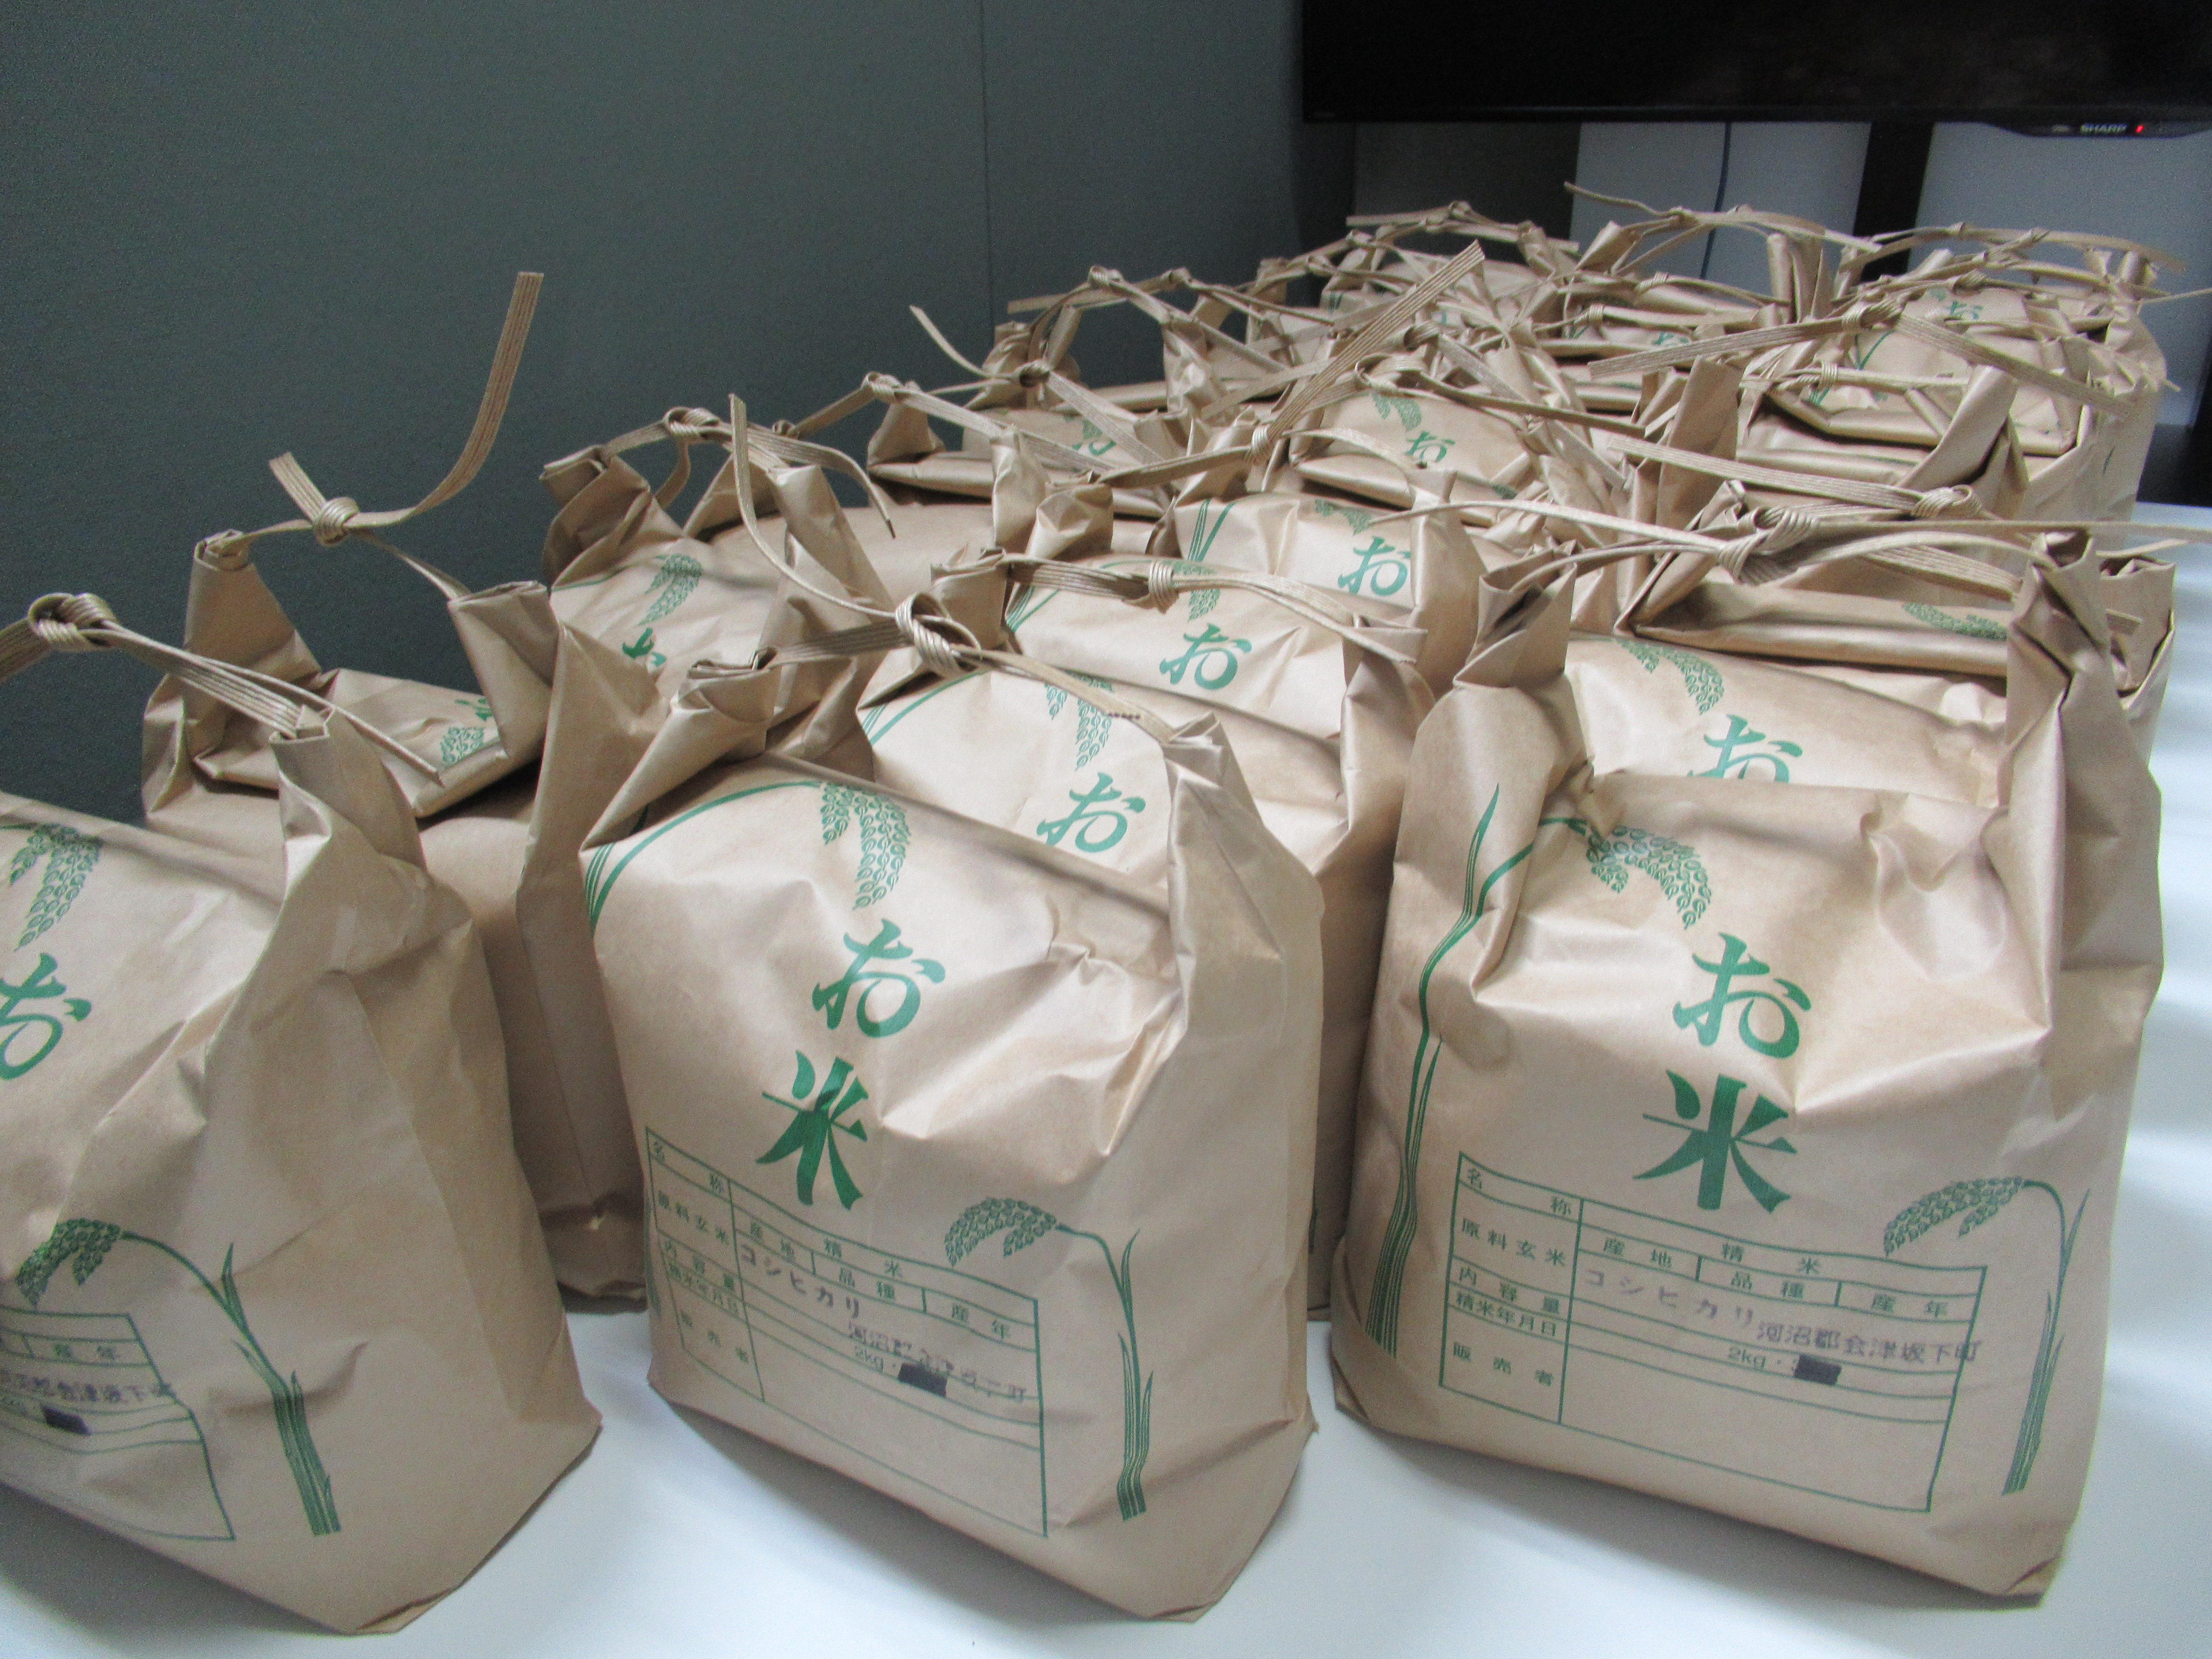 MS. Igarashi donated rice to the international students